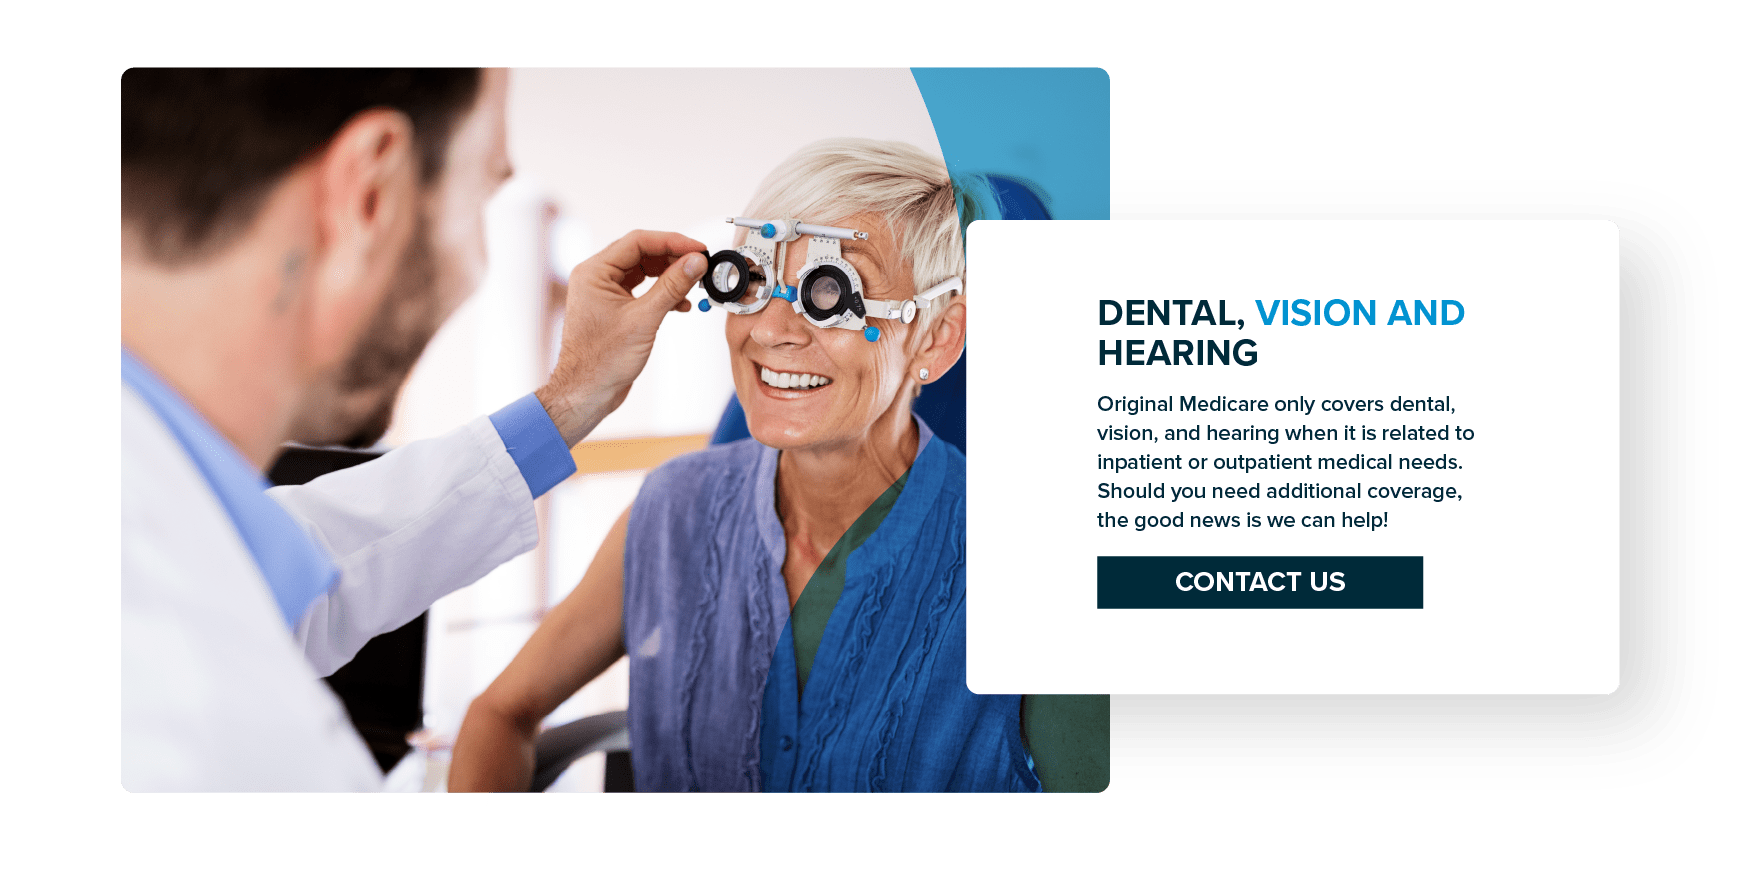 Dental, Vision and Hearing Plans